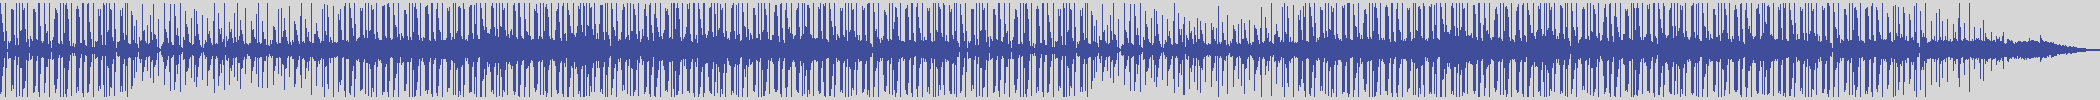 noclouds_chillout [NOC144] Waldo Munoz - Reverse [Sun Chill Edit] audio wave form